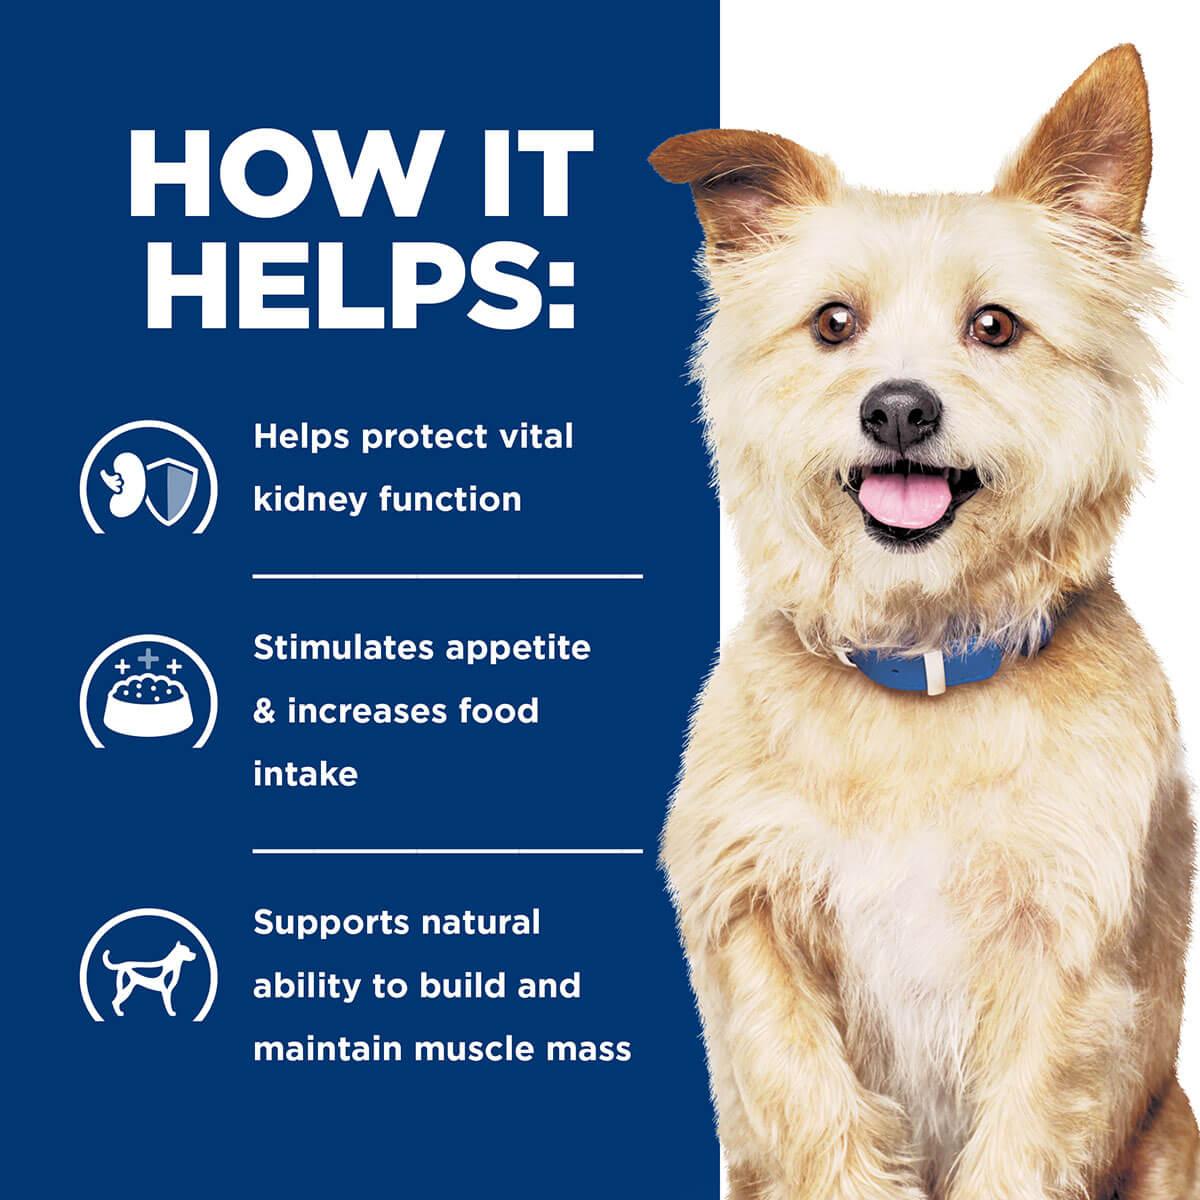 Hill's Prescription Diet K/D Kidney Care Dry Dog Food